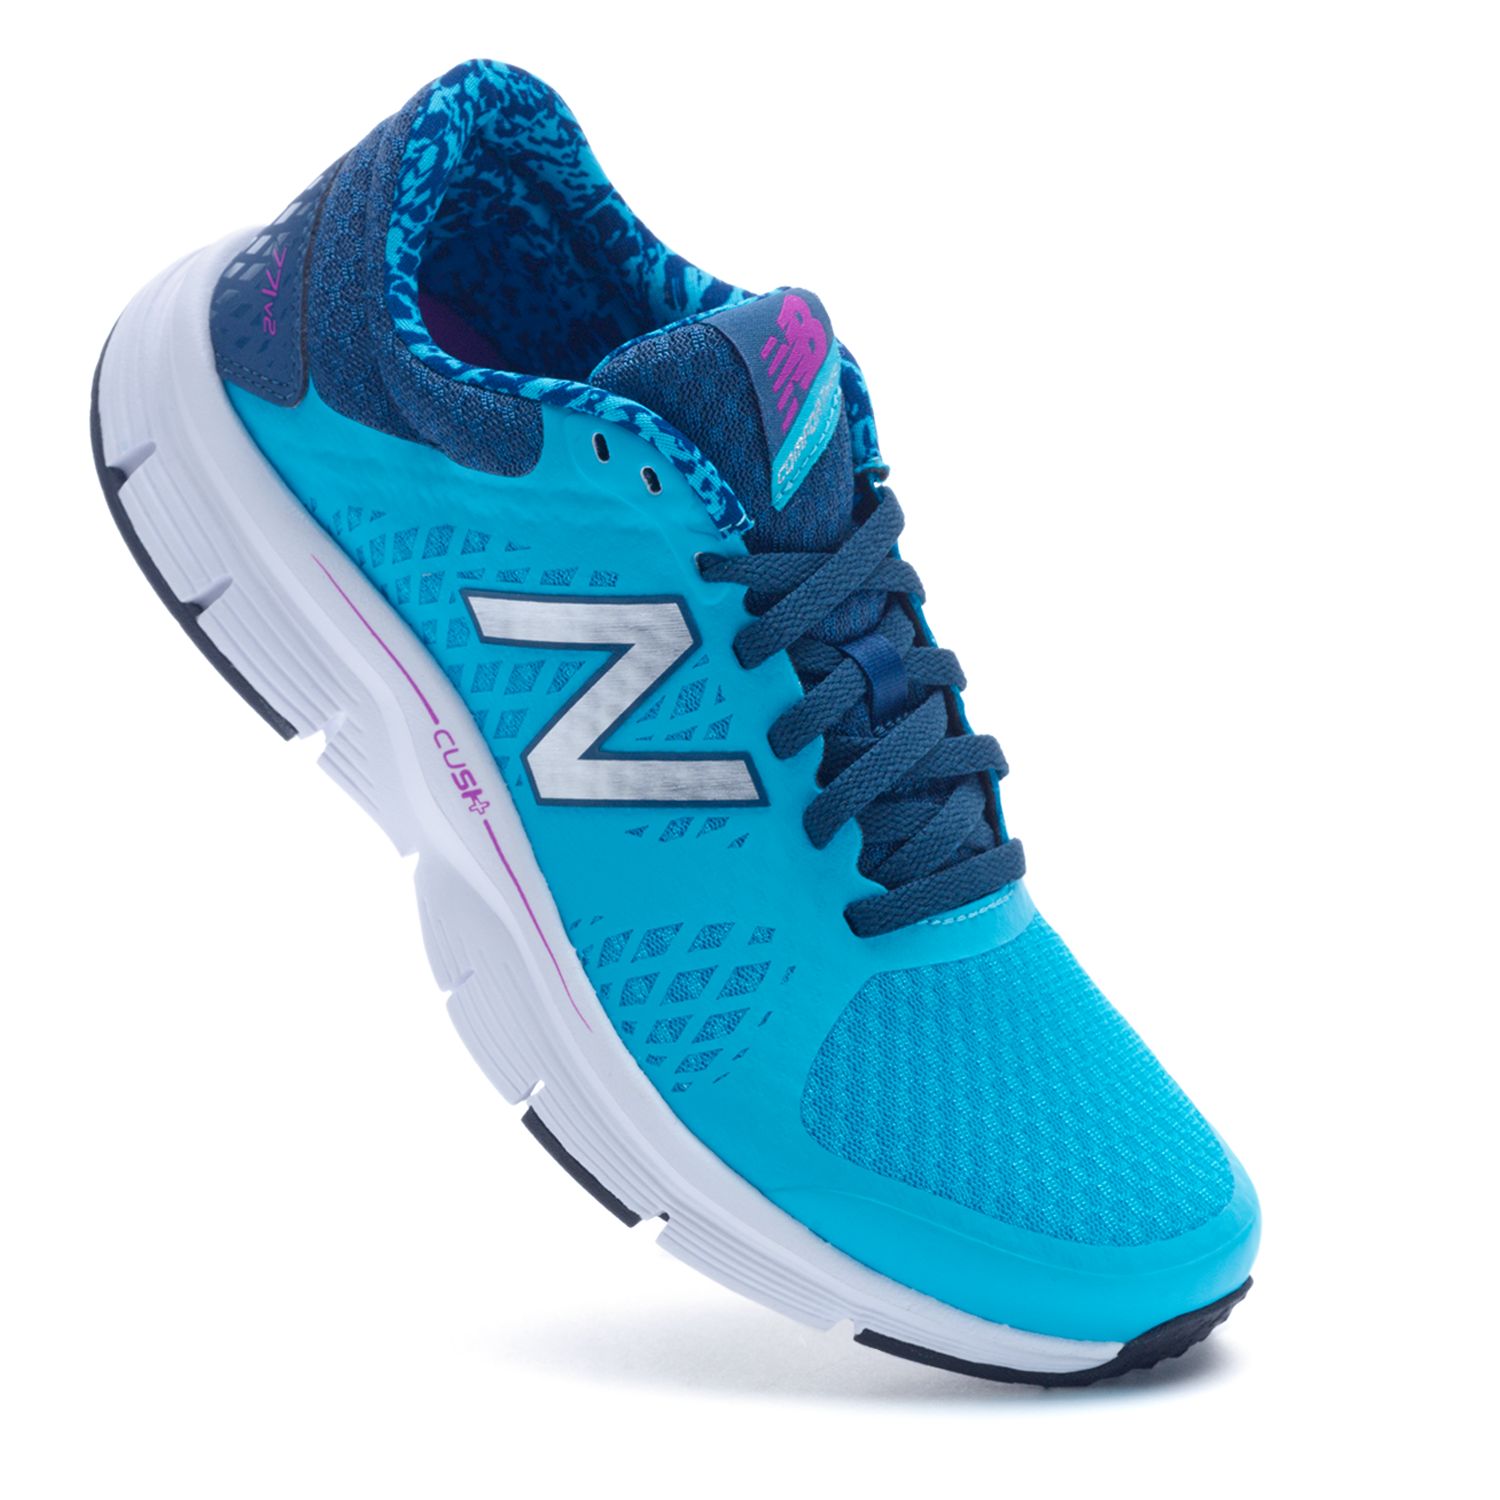 New Balance 771 Women's Running Shoes